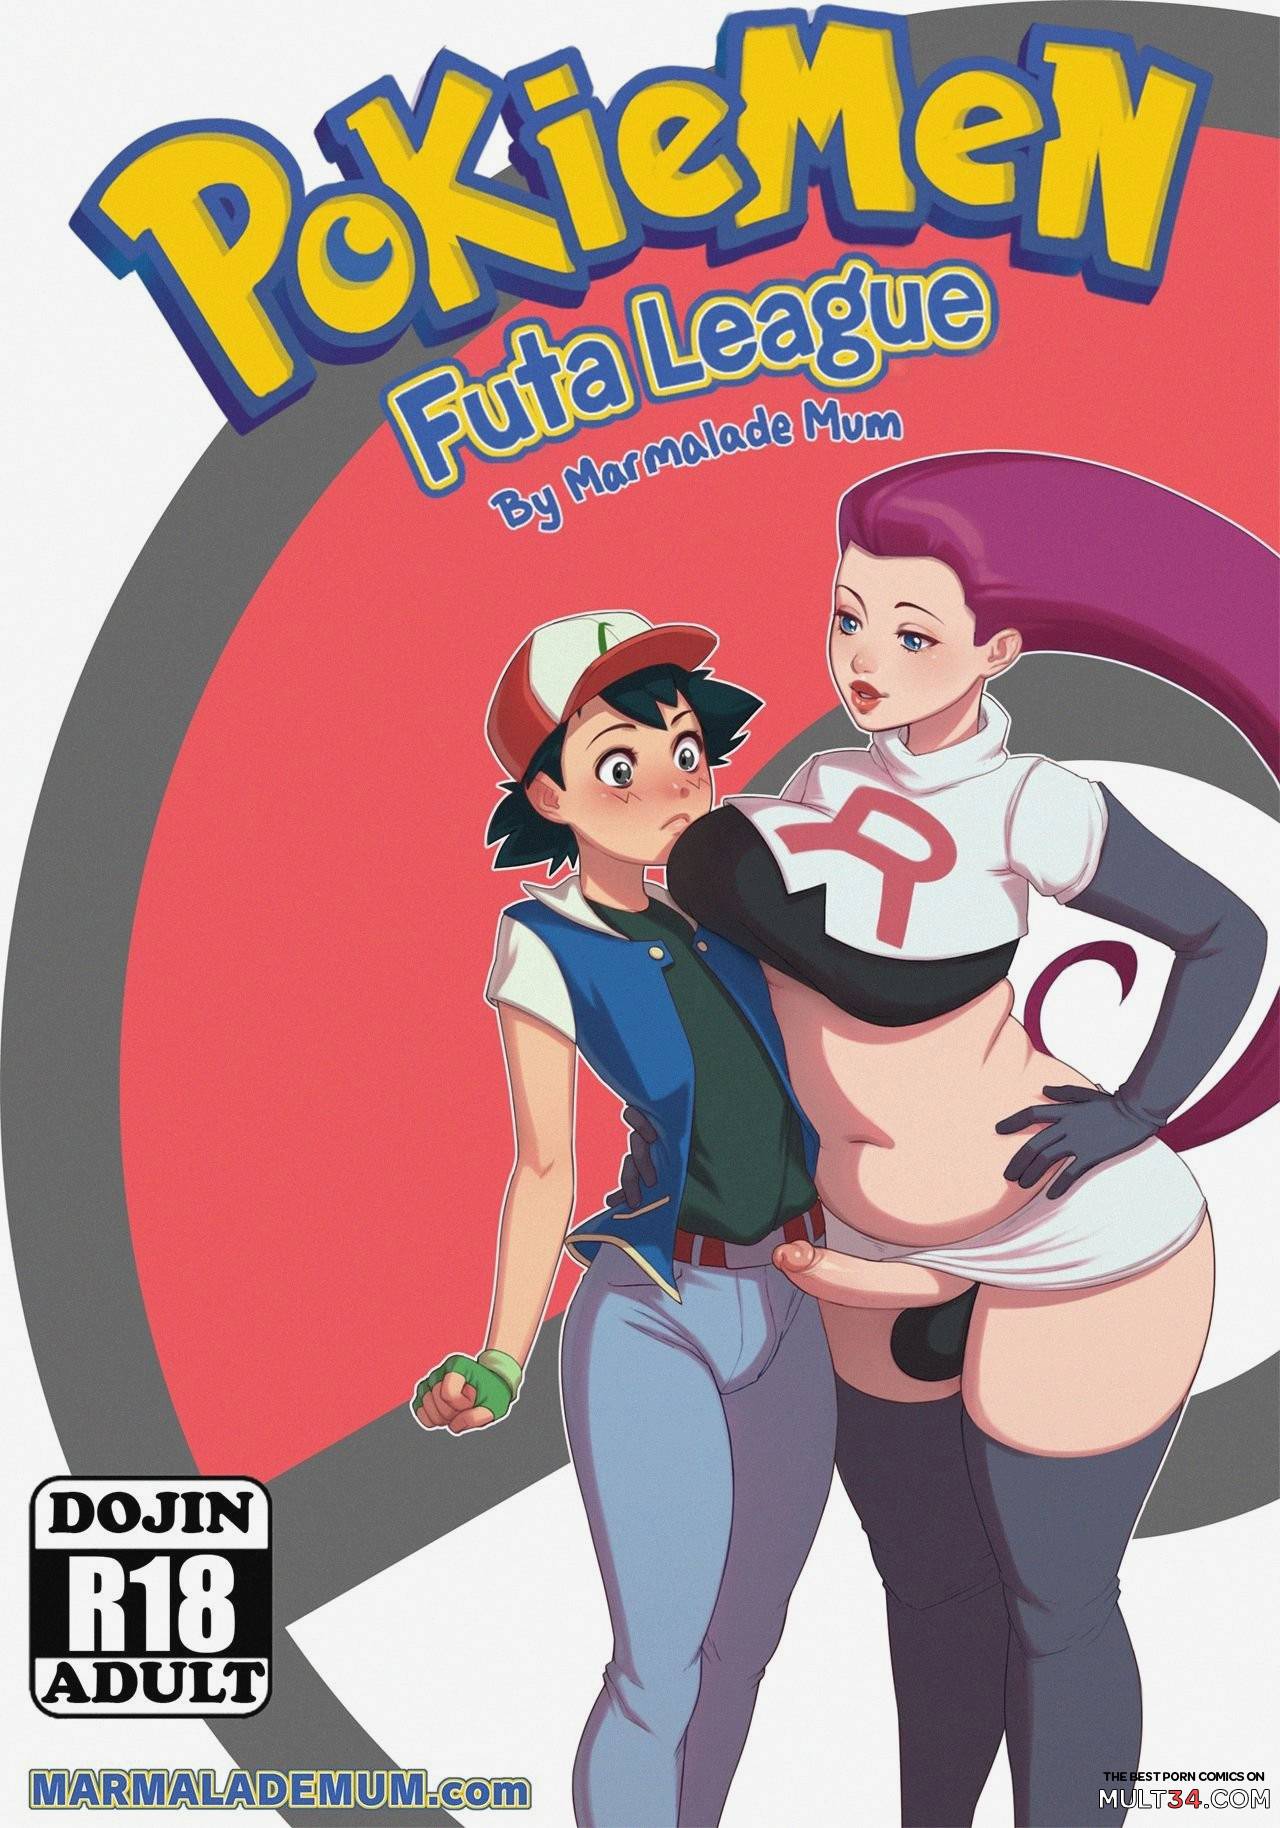 Black Futa Cartoon Porn - Pokiemen - Futa League gay porn comic - the best cartoon porn comics, Rule  34 | MULT34